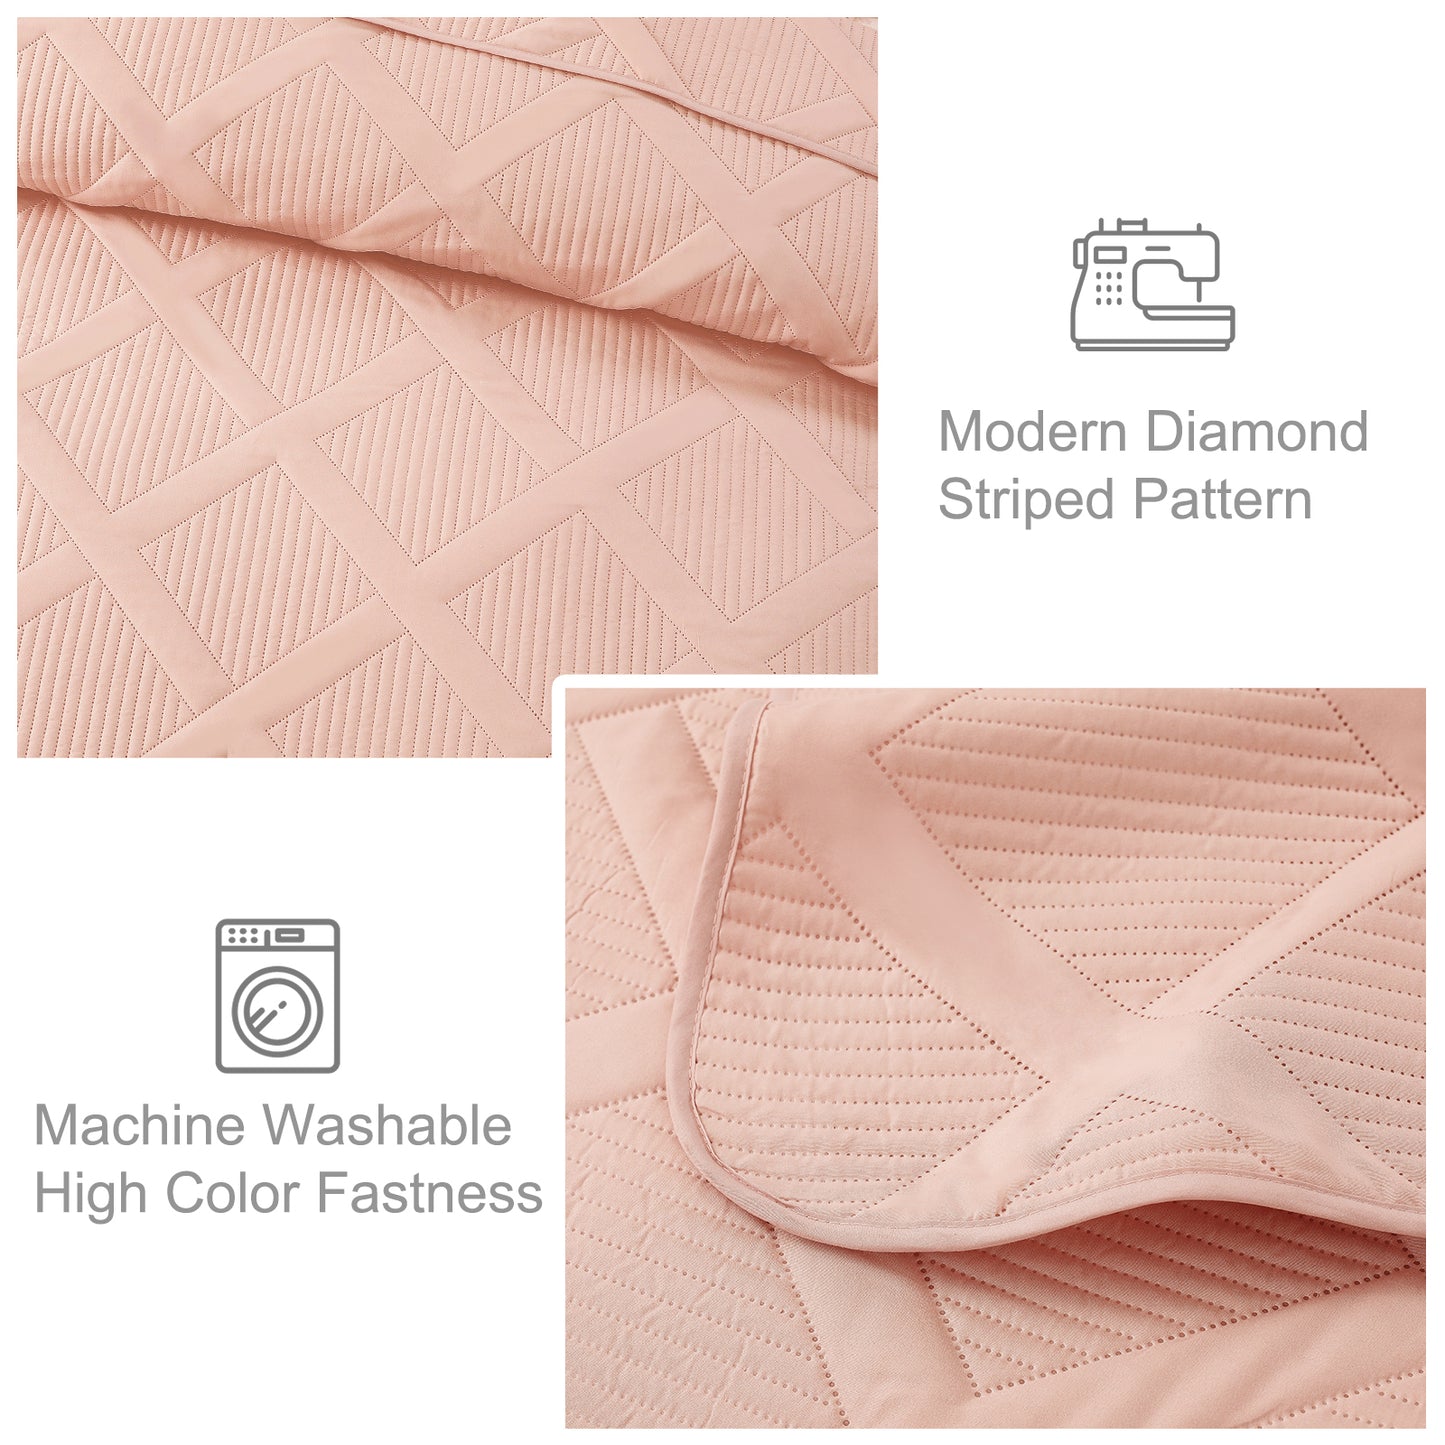 Exclusivo Mezcla Ultrasonic Twin/ Twin XL Quilt Set, Lightweight Bedspreads Modern Striped Coverlet with 1 Pillow Sham, Blush Pink